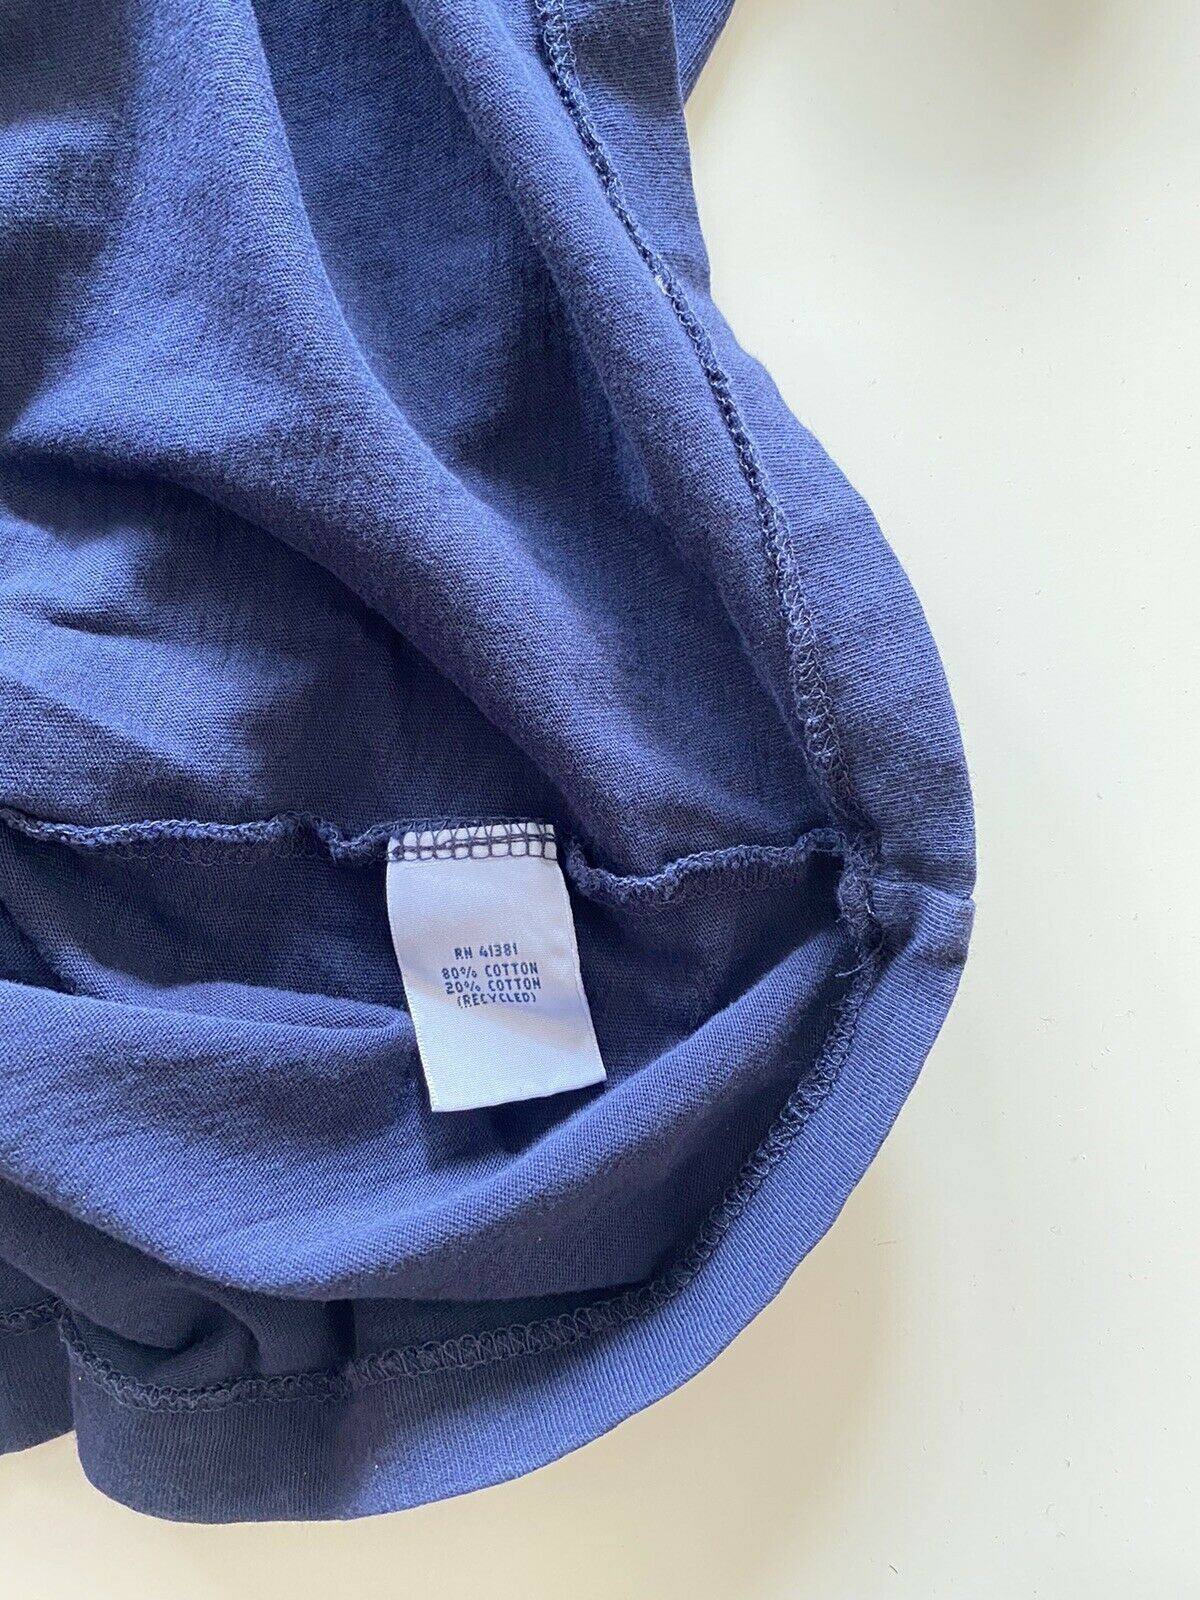 Polo Ralph Lauren PARIS Custom Fit T-Shirt L Blau 